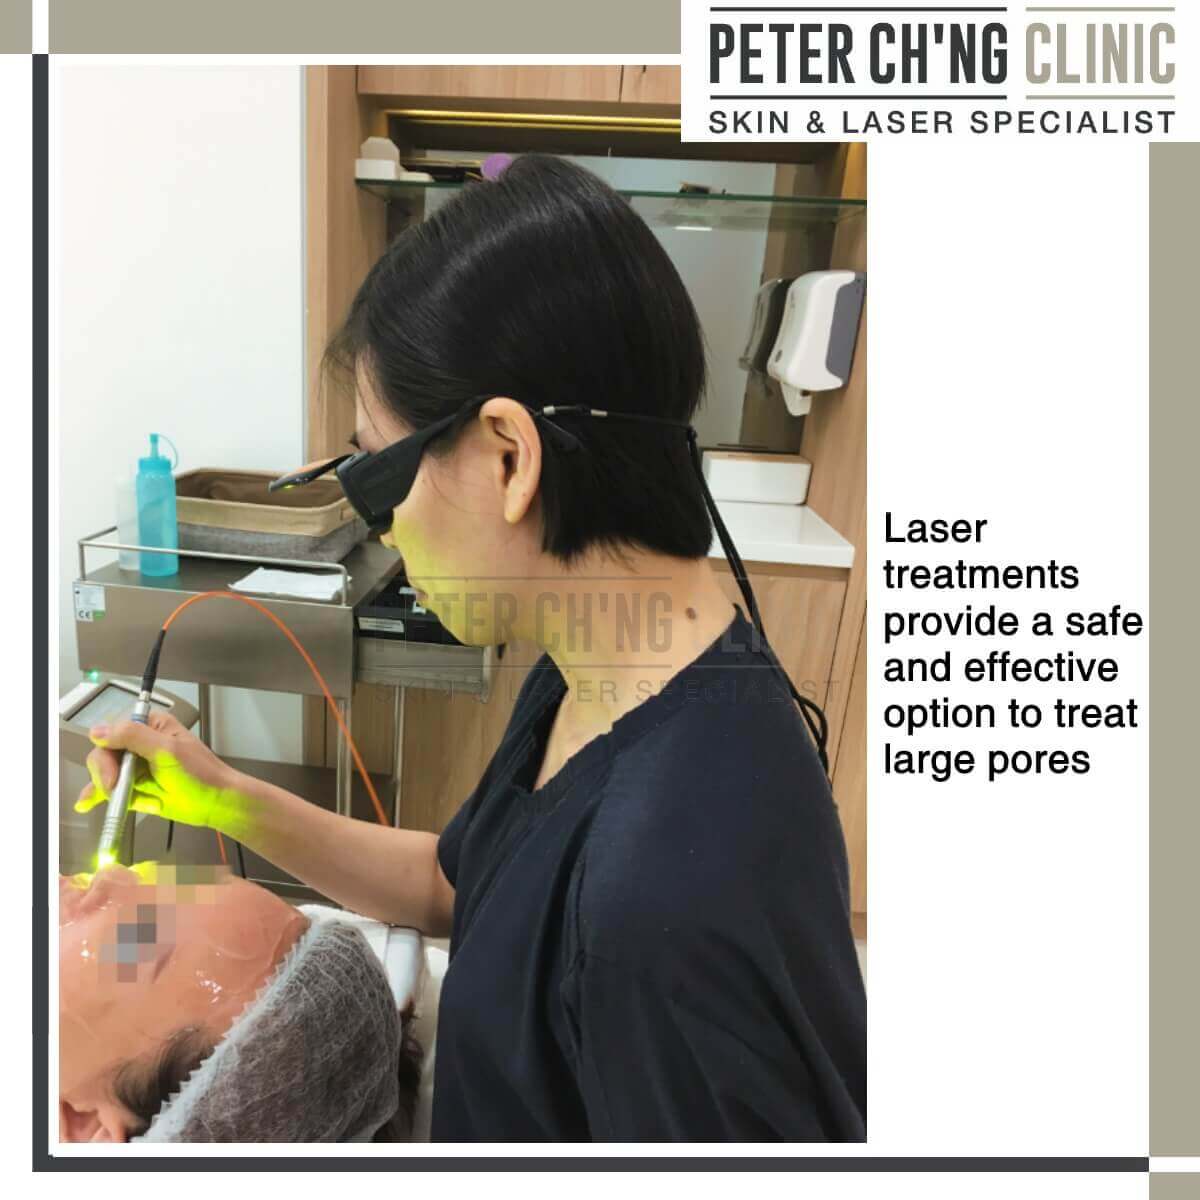 Laser treatment for large pores